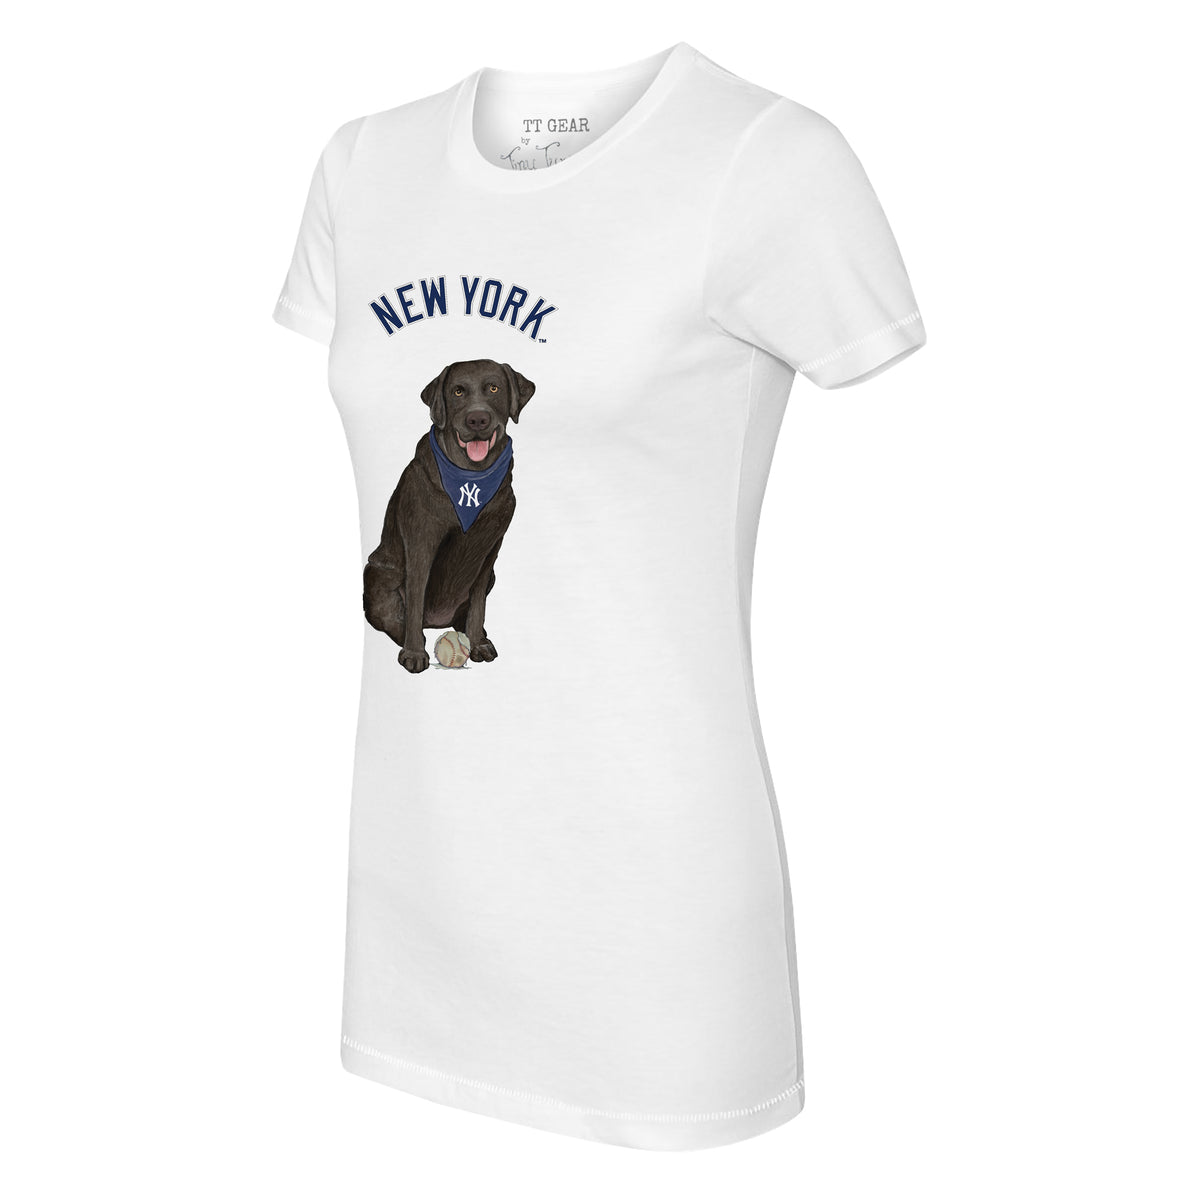 New York Yankees Black Labrador Retriever Tee Shirt